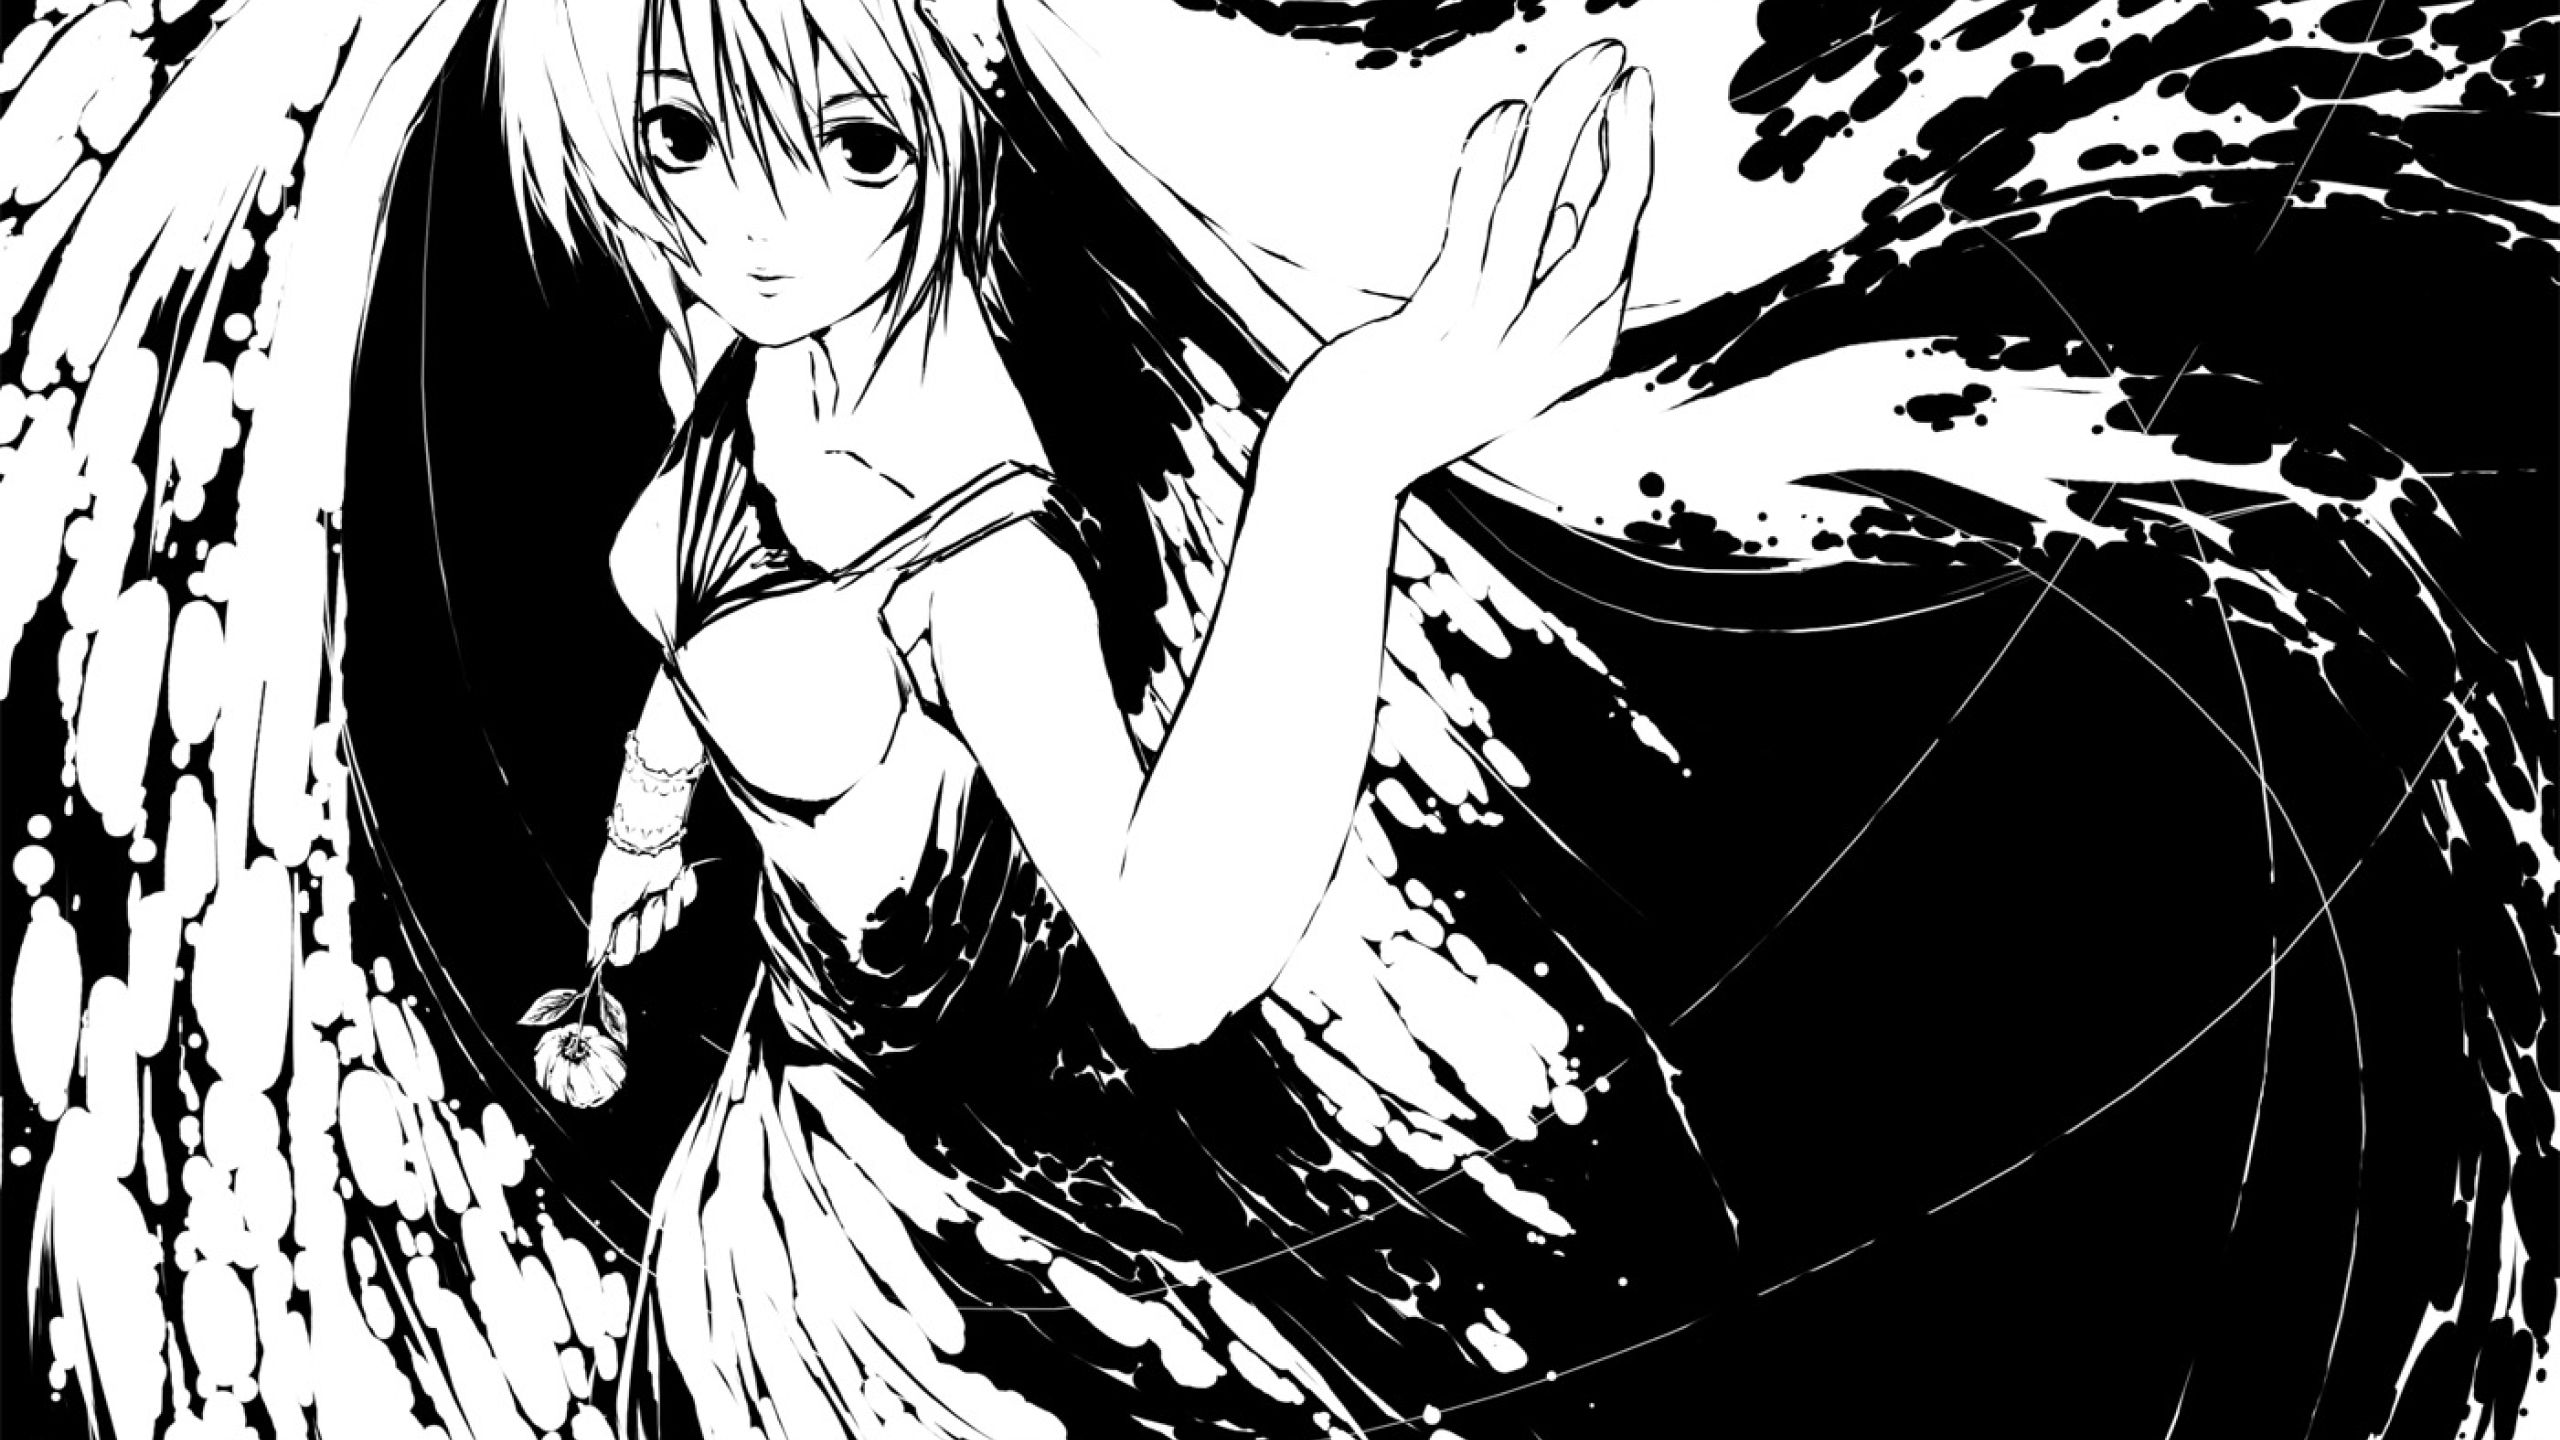 hatsune miku, black white, girl 1440P Resolution Wallpaper, HD Anime 4K Wallpaper, Image, Photo and Background